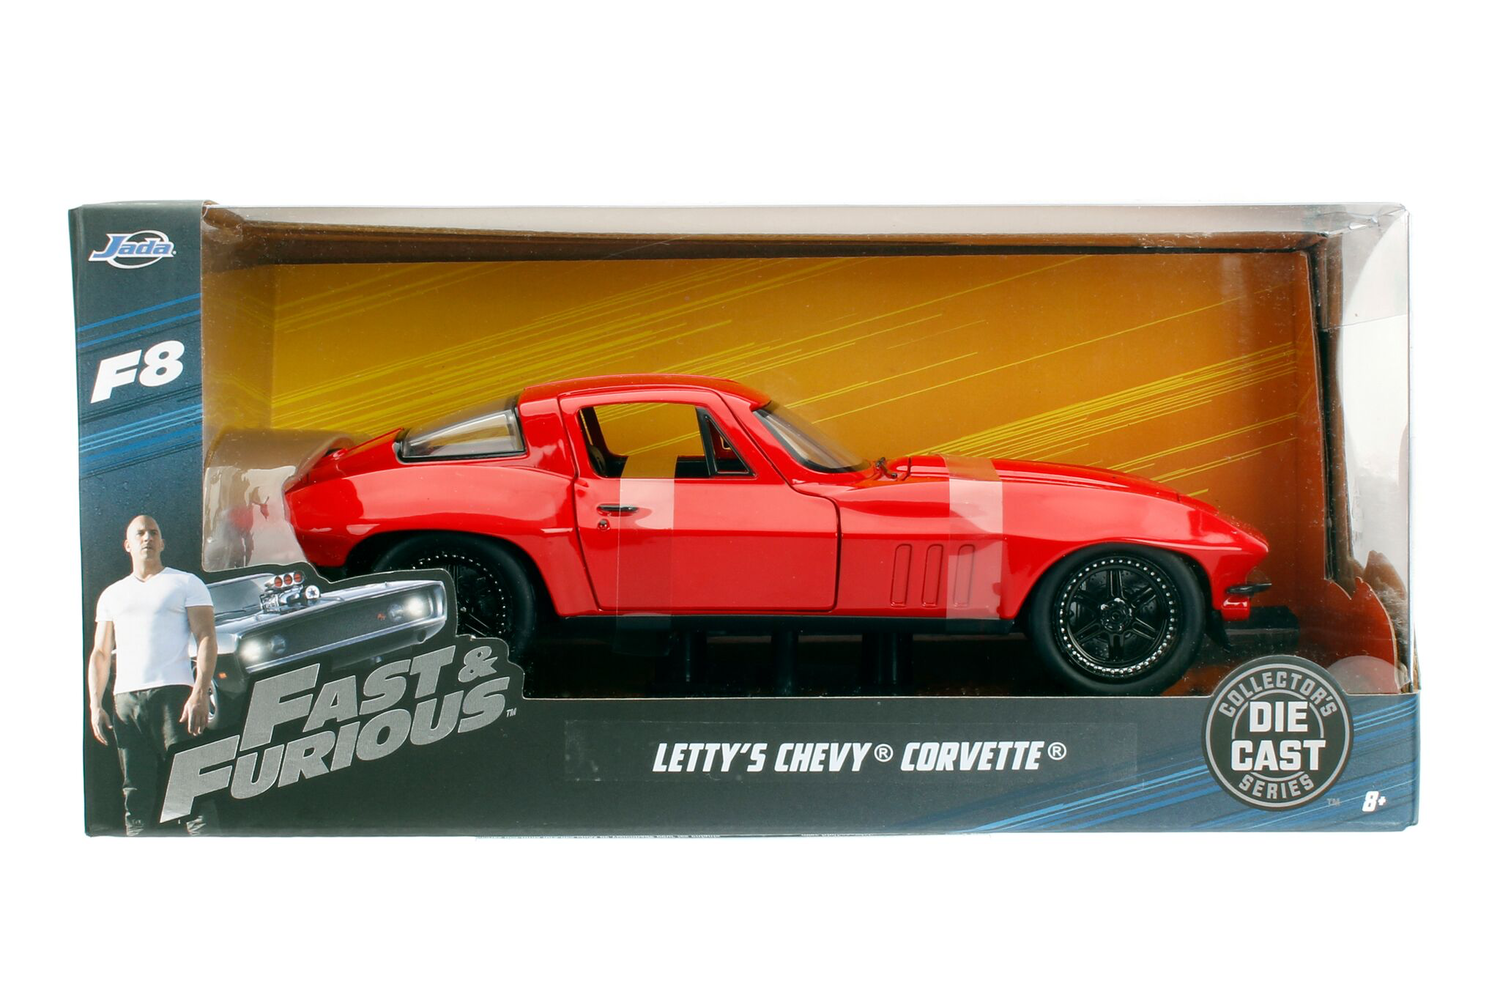 Lettys Chevy Corvette Furious 8